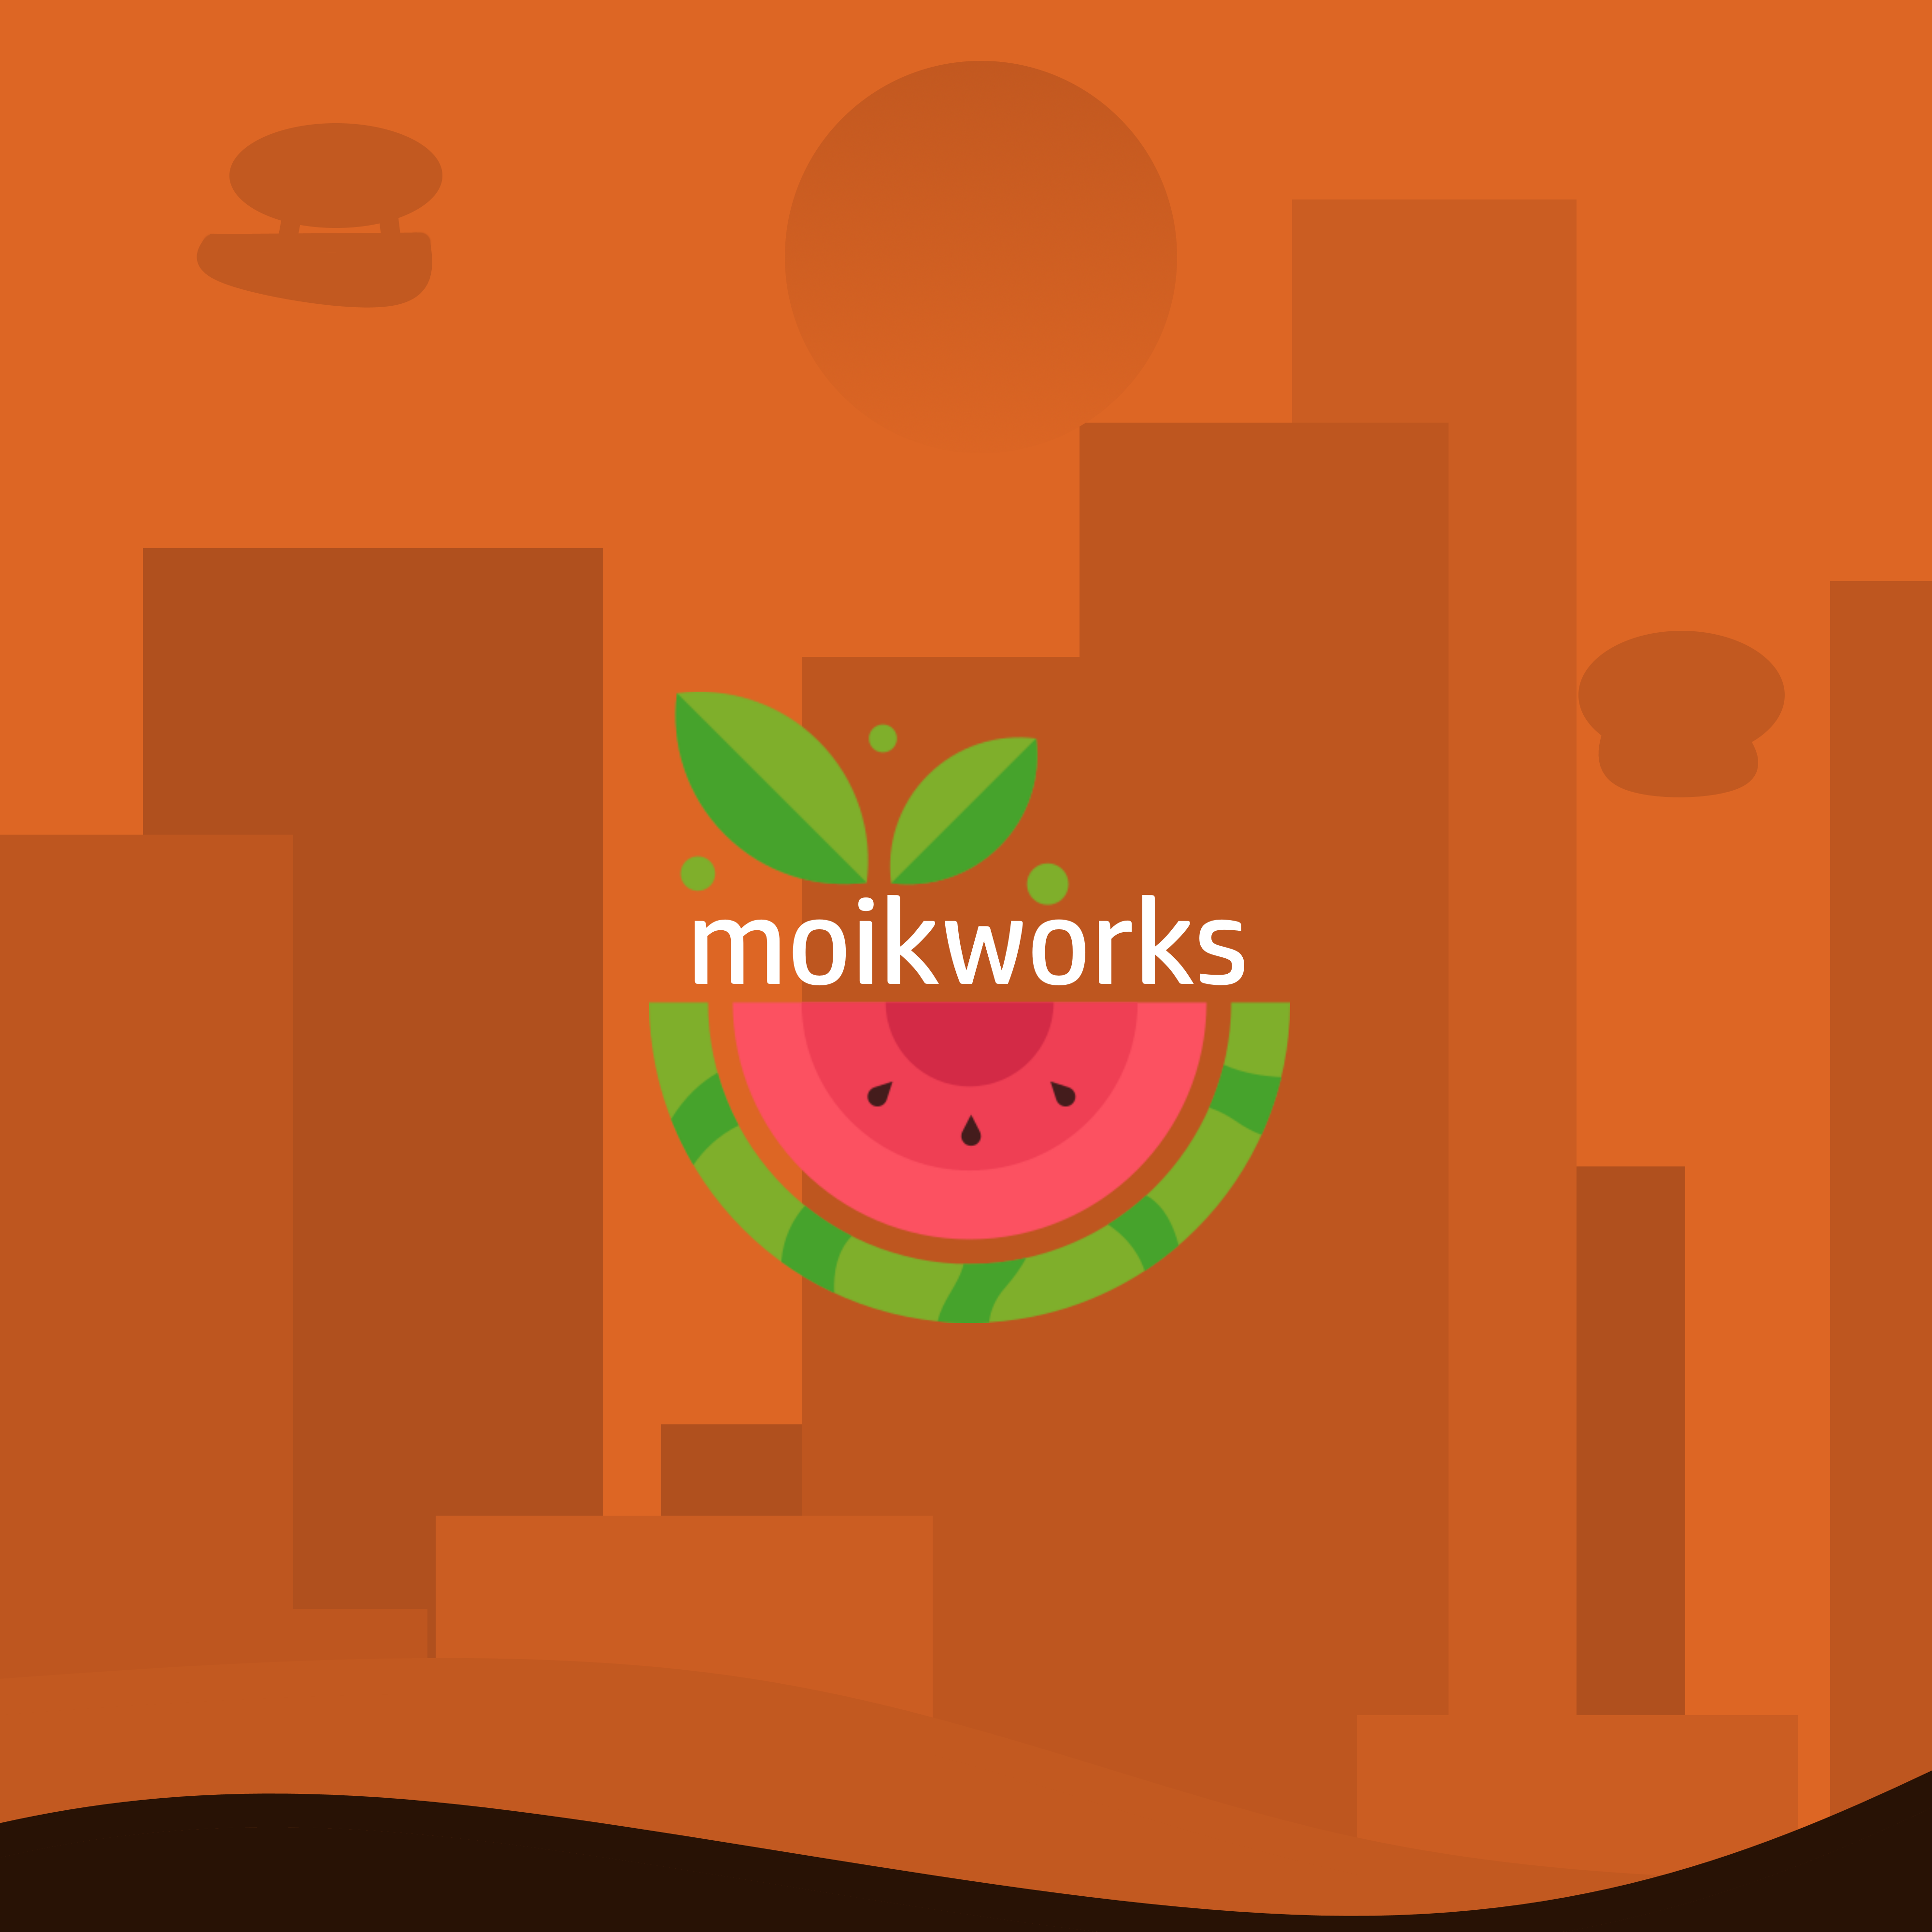 moikworks announcement photo